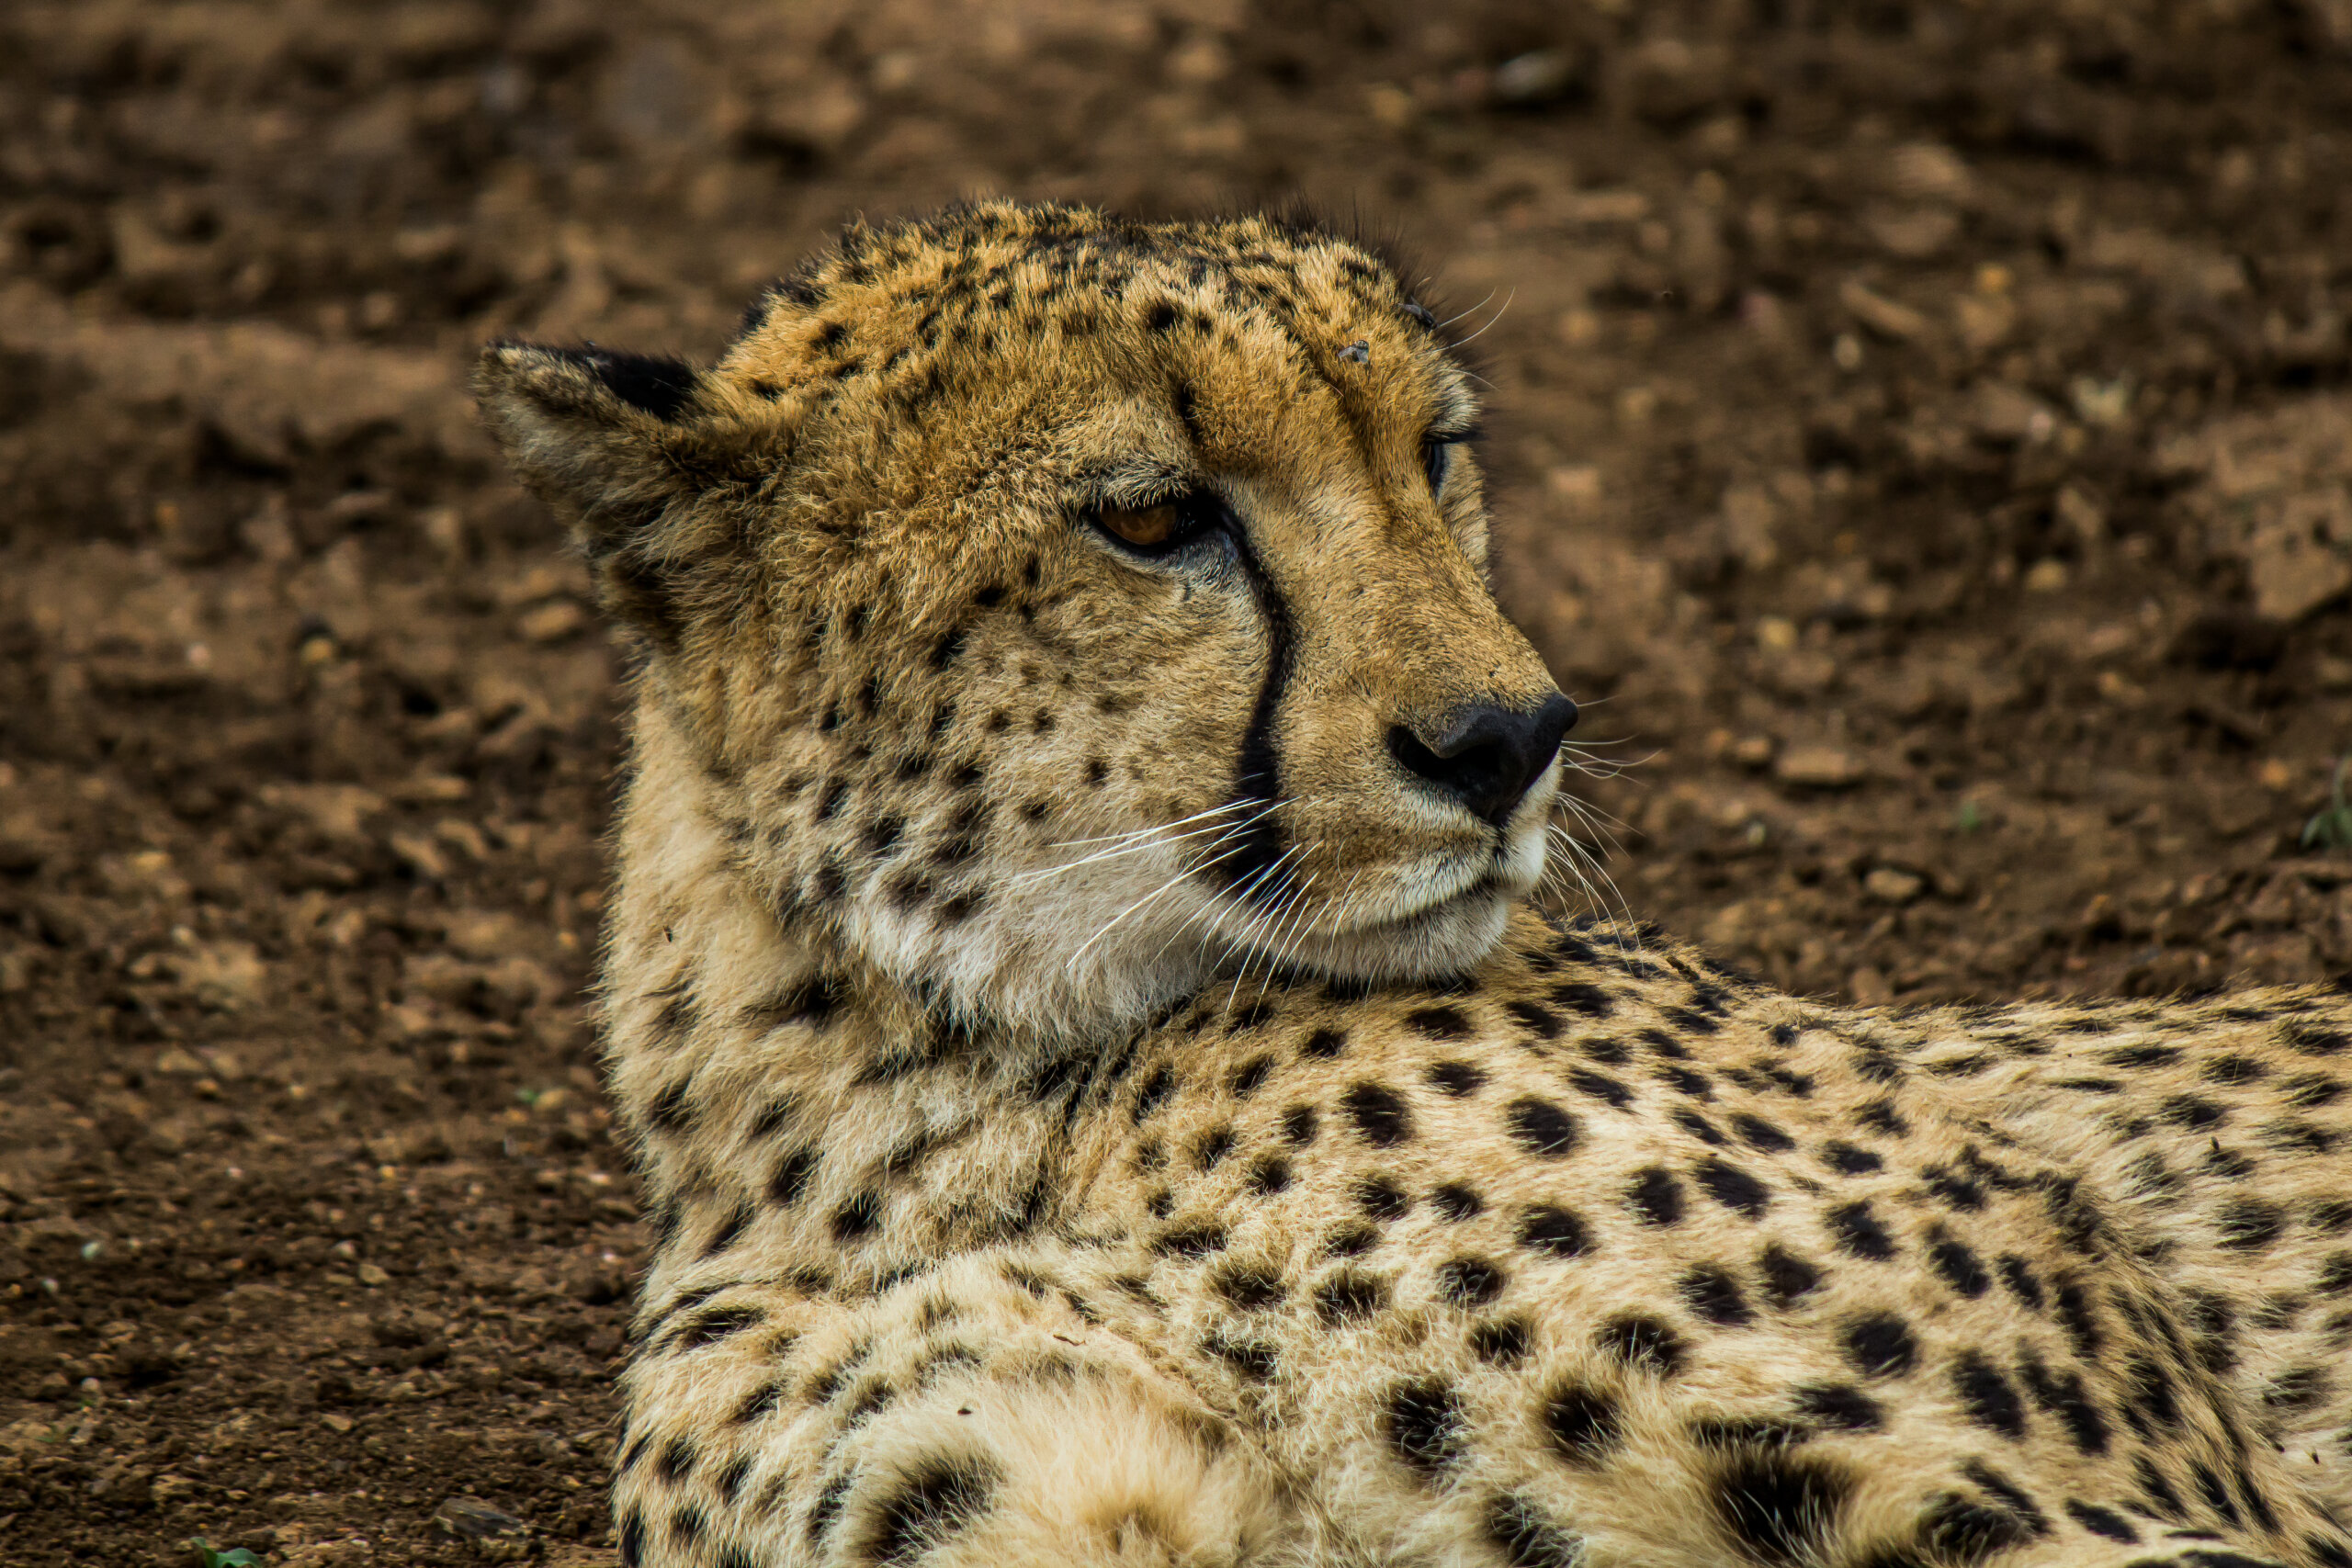 Cheetah (Acinonyx jubatus) @ Thanda Private Game Reserve, South Africa. Photo: Håvard Rosenlund